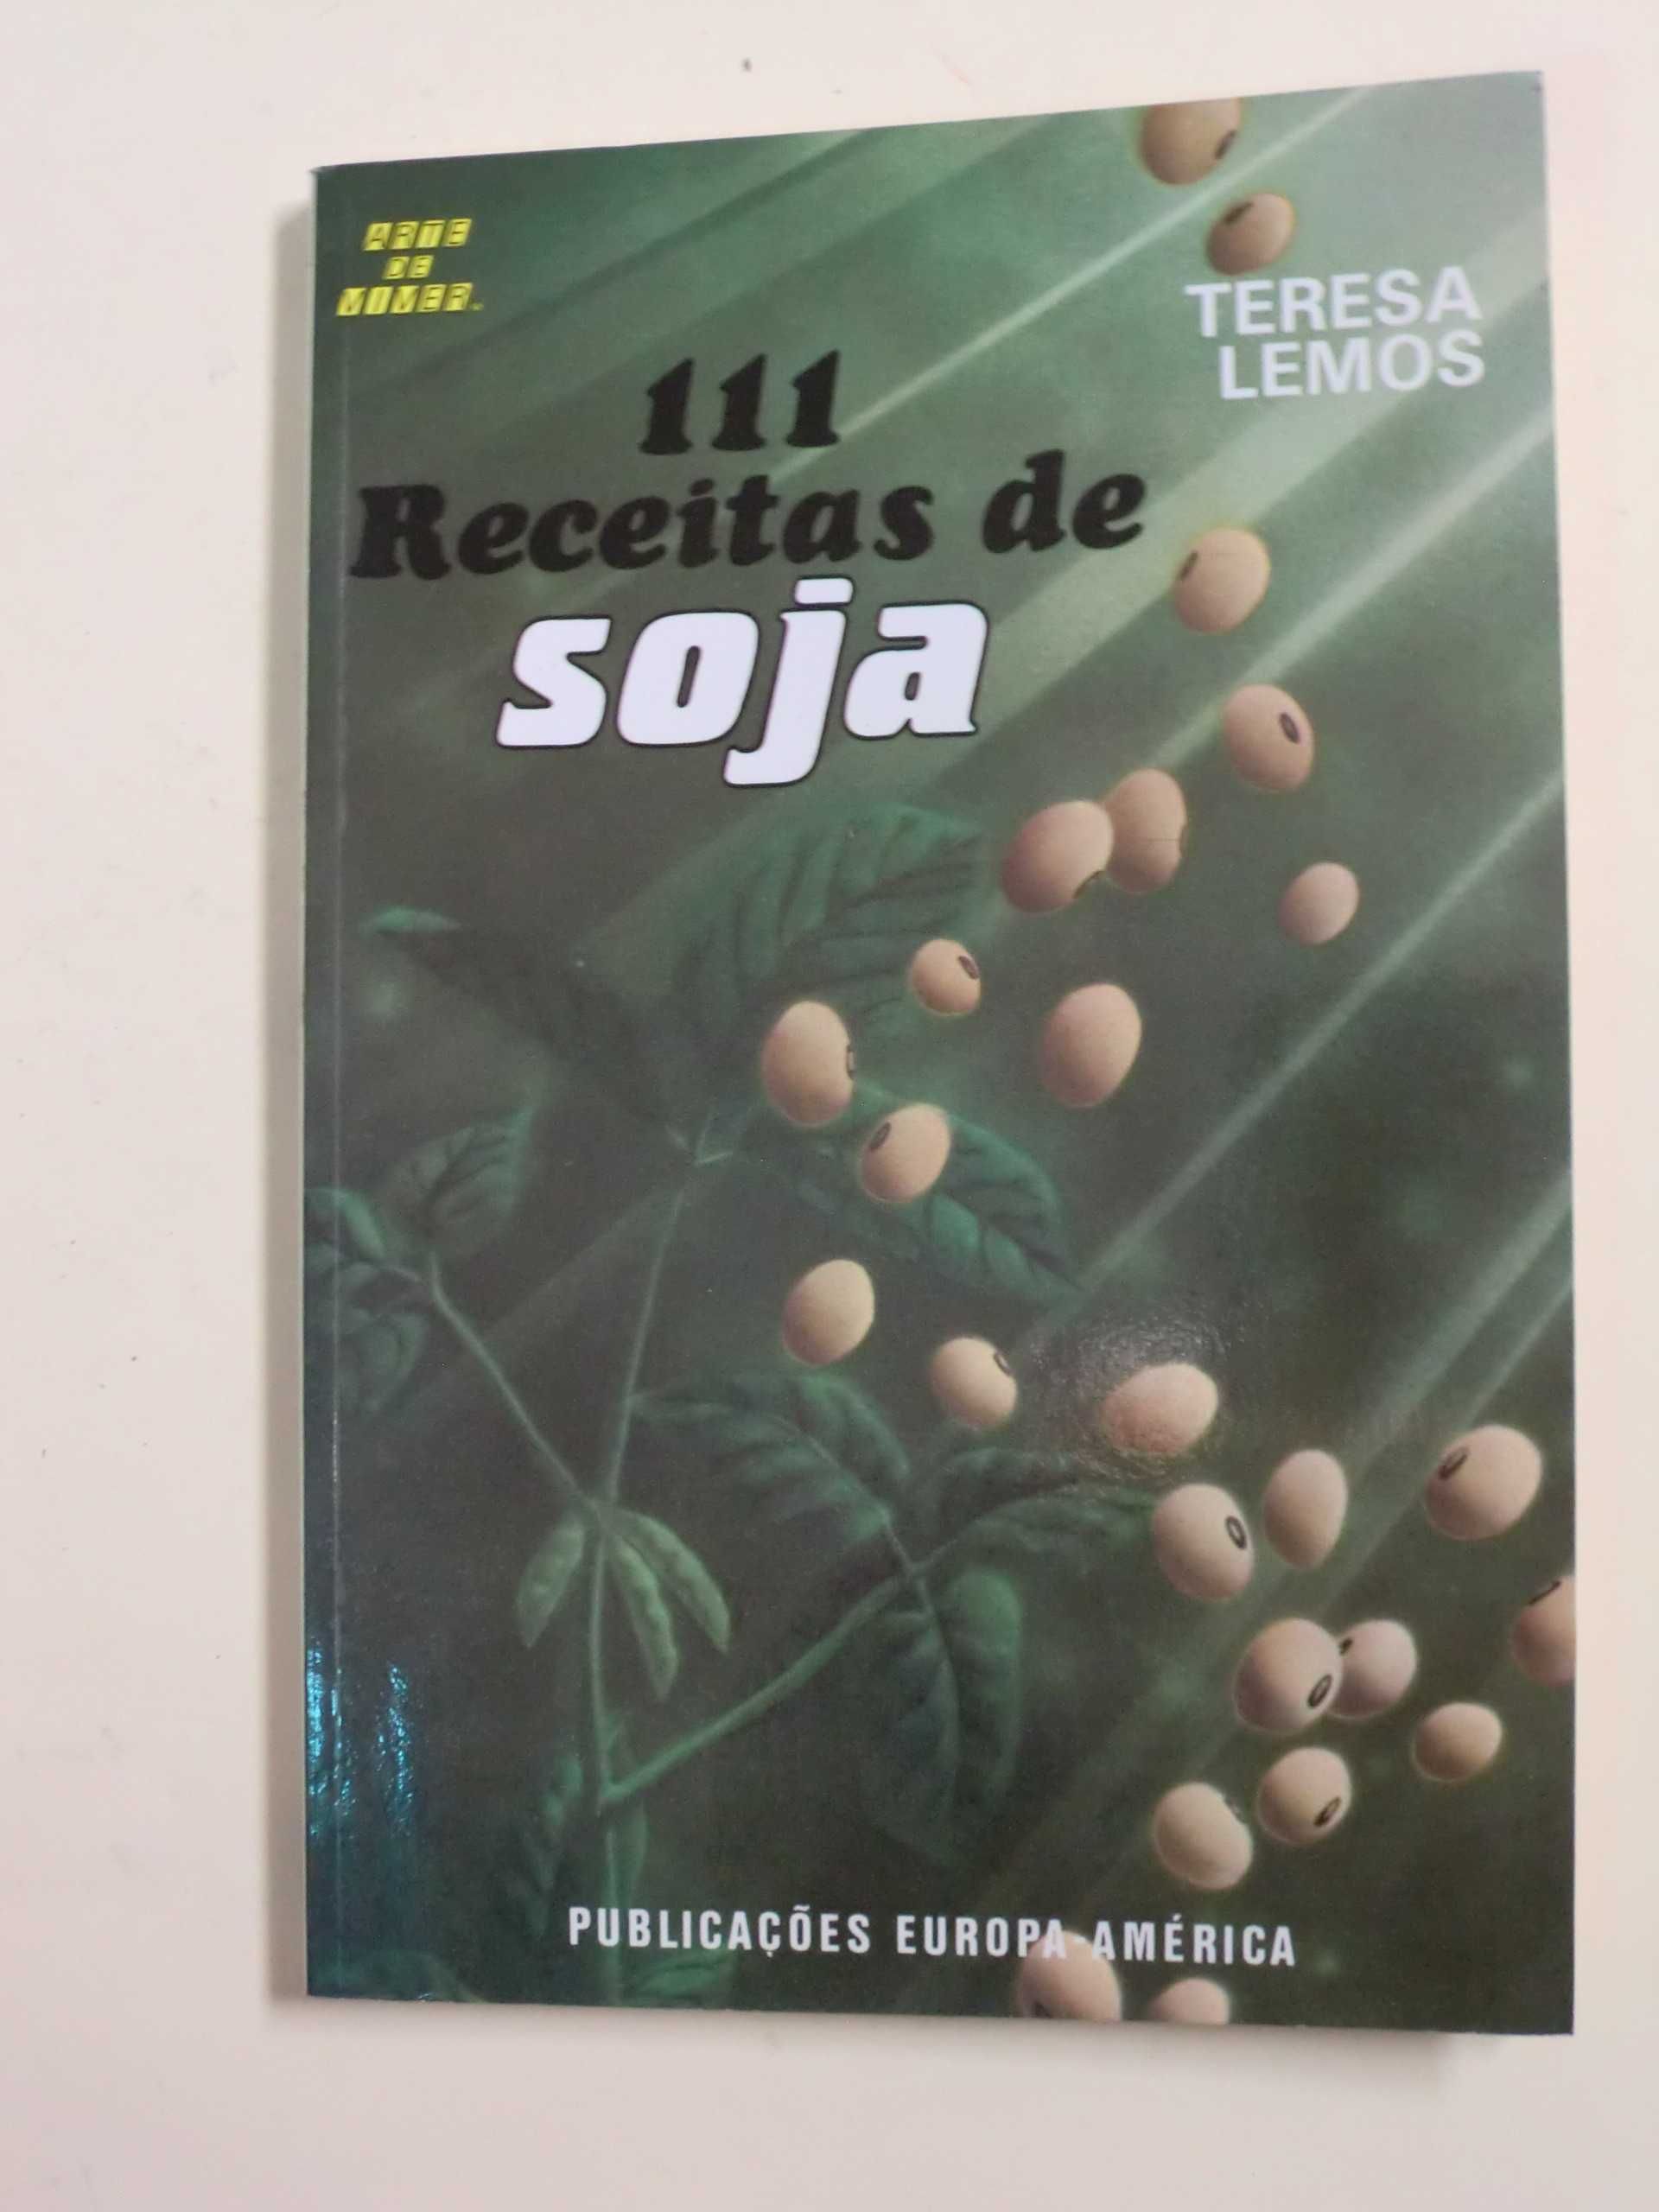 111 Receitas de Soja
de Teresa Lemos